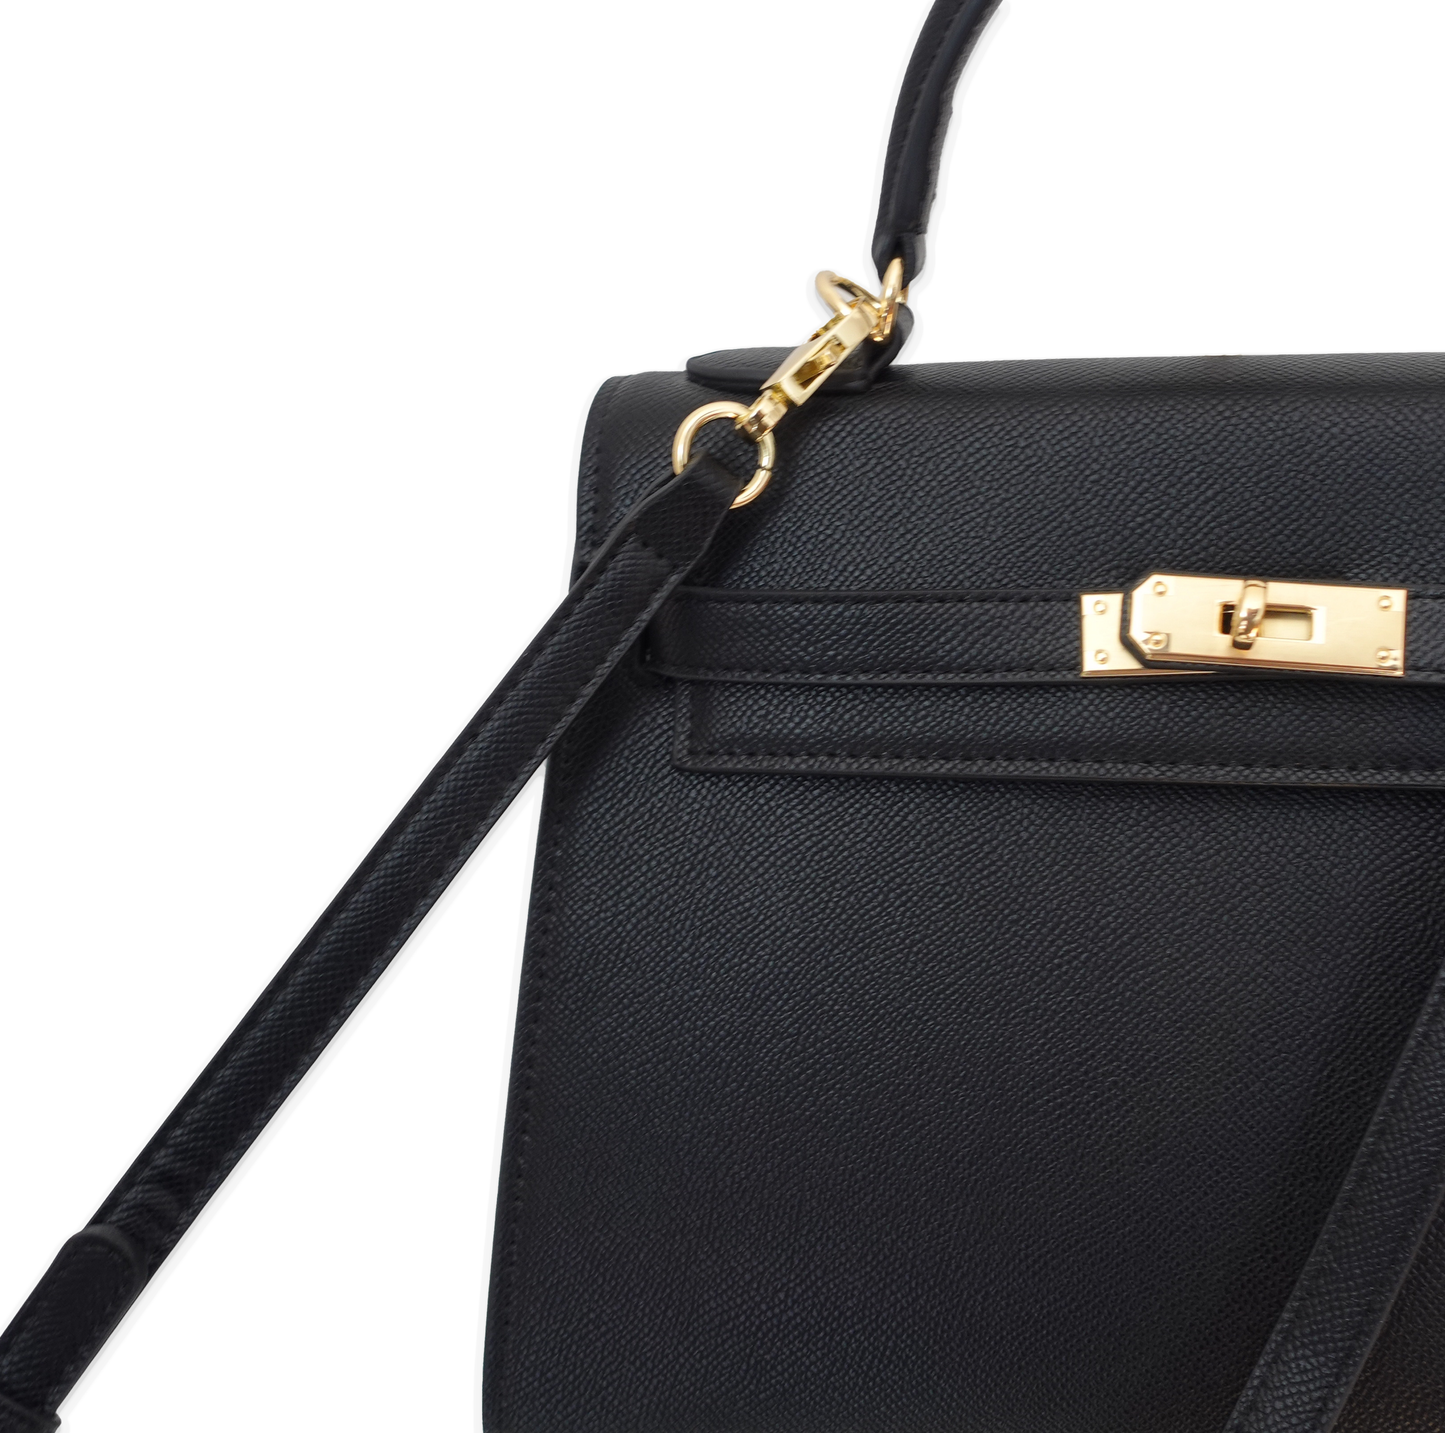 Sofia | Luxury Vegan Leather Handbag | Charcoal